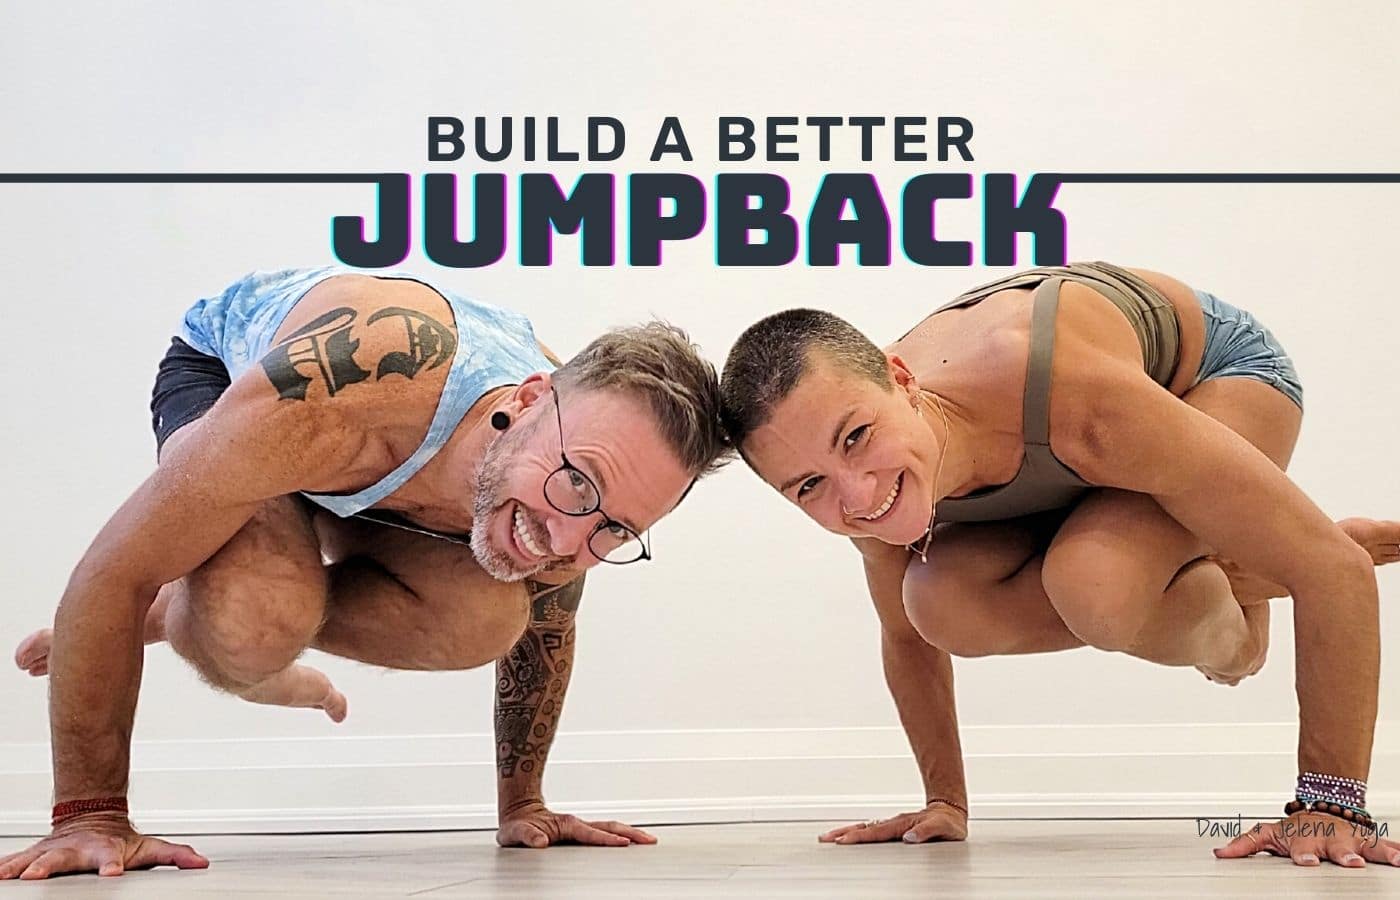 Build a Better Jumpback - Web (1400 x 900 px) (1)